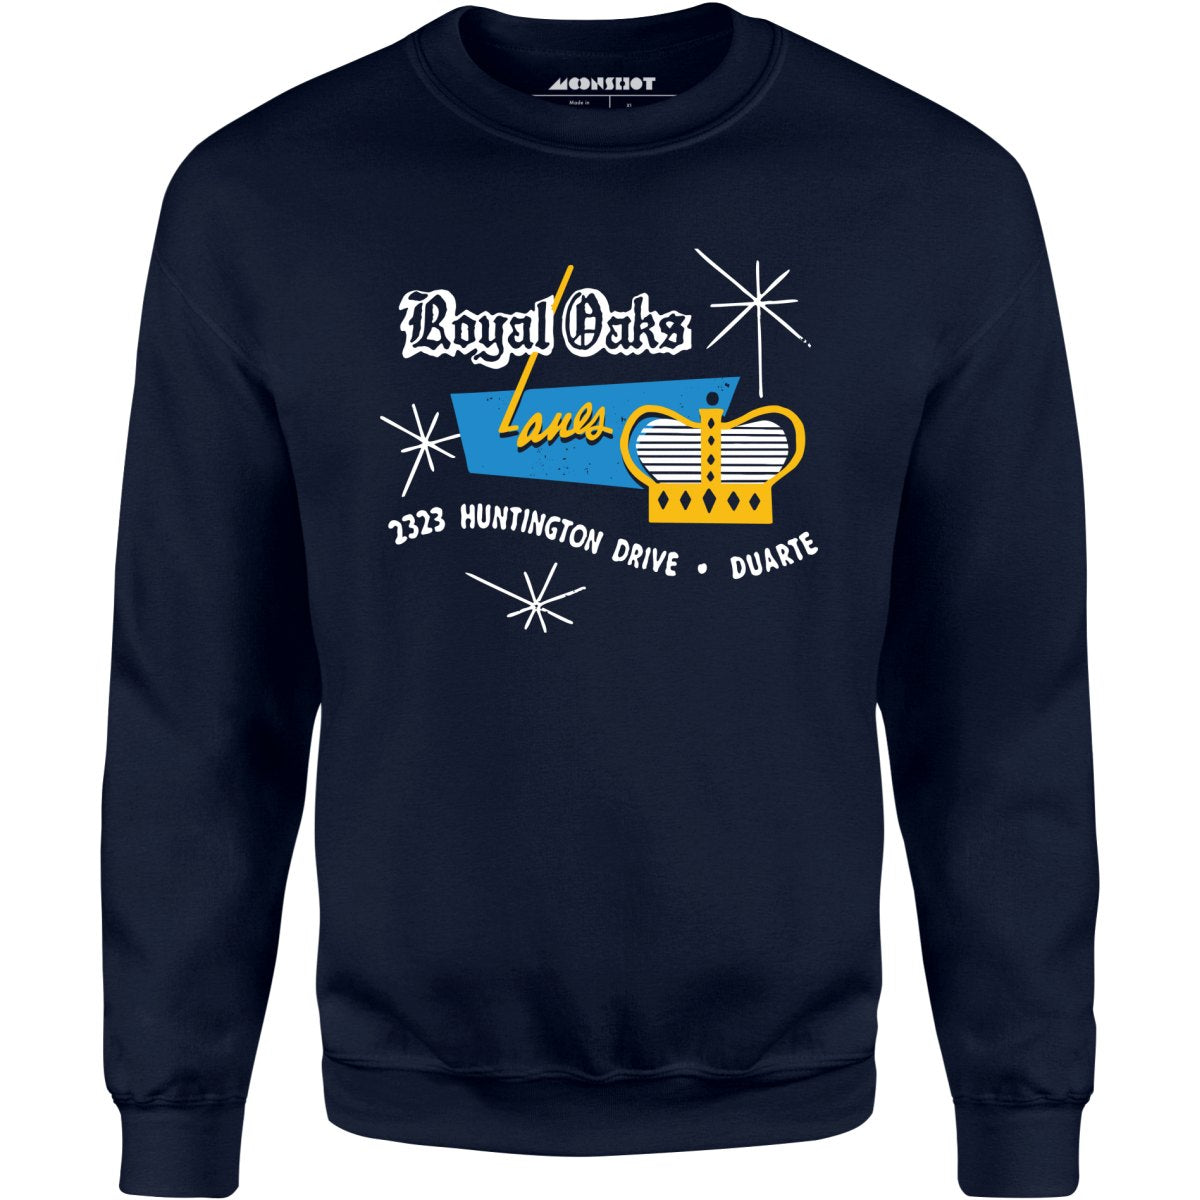 Royal Oaks Lanes - Duarte, CA - Vintage Bowling Alley - Unisex Sweatshirt